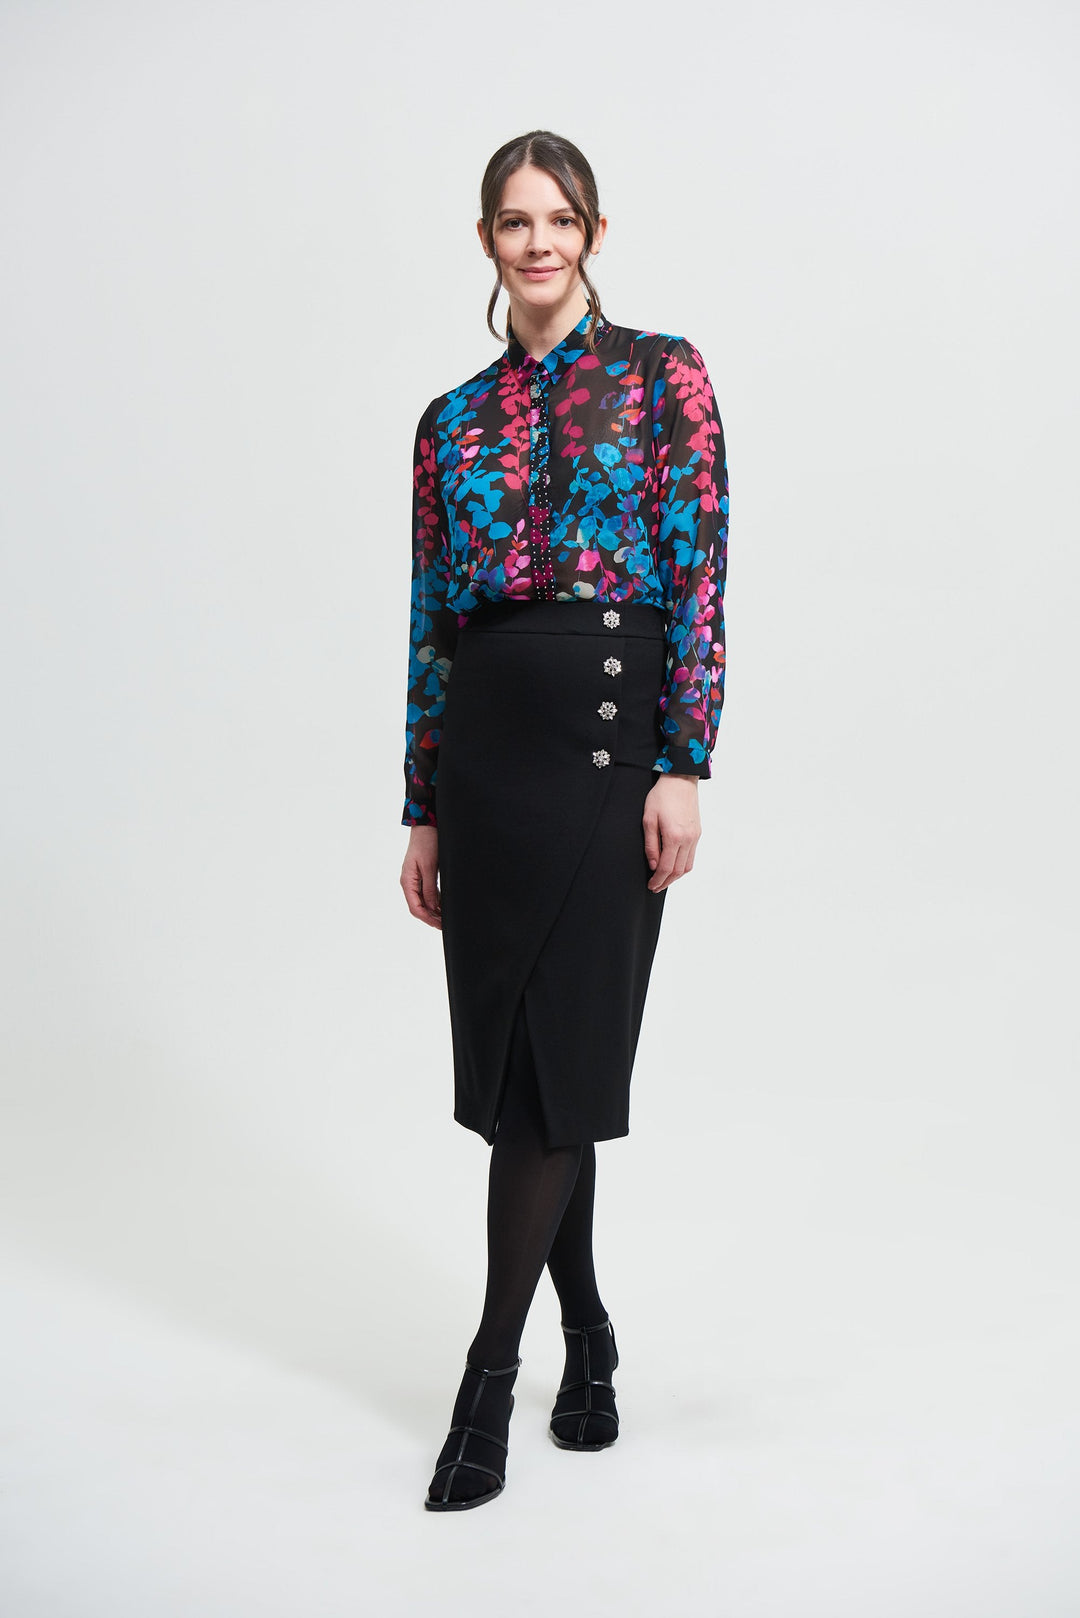 Joseph Ribkoff Skirt Style 213017